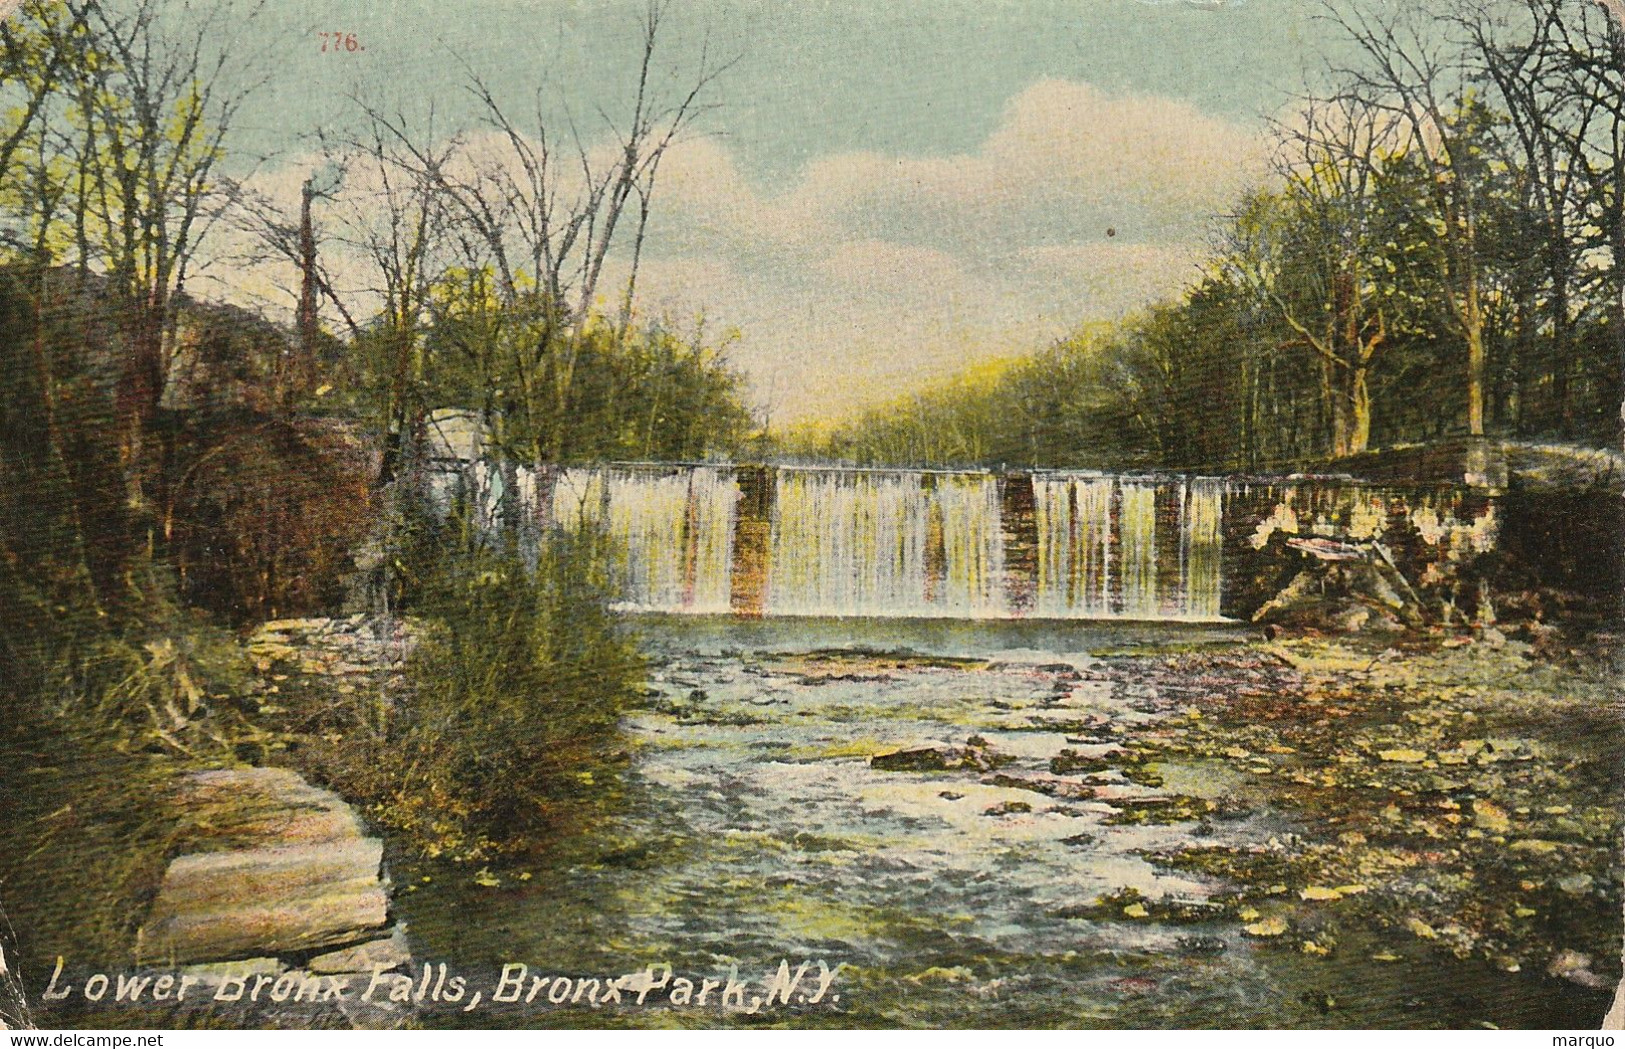 New York Bronx Park Lower Bronx Falls 1909 - Bronx